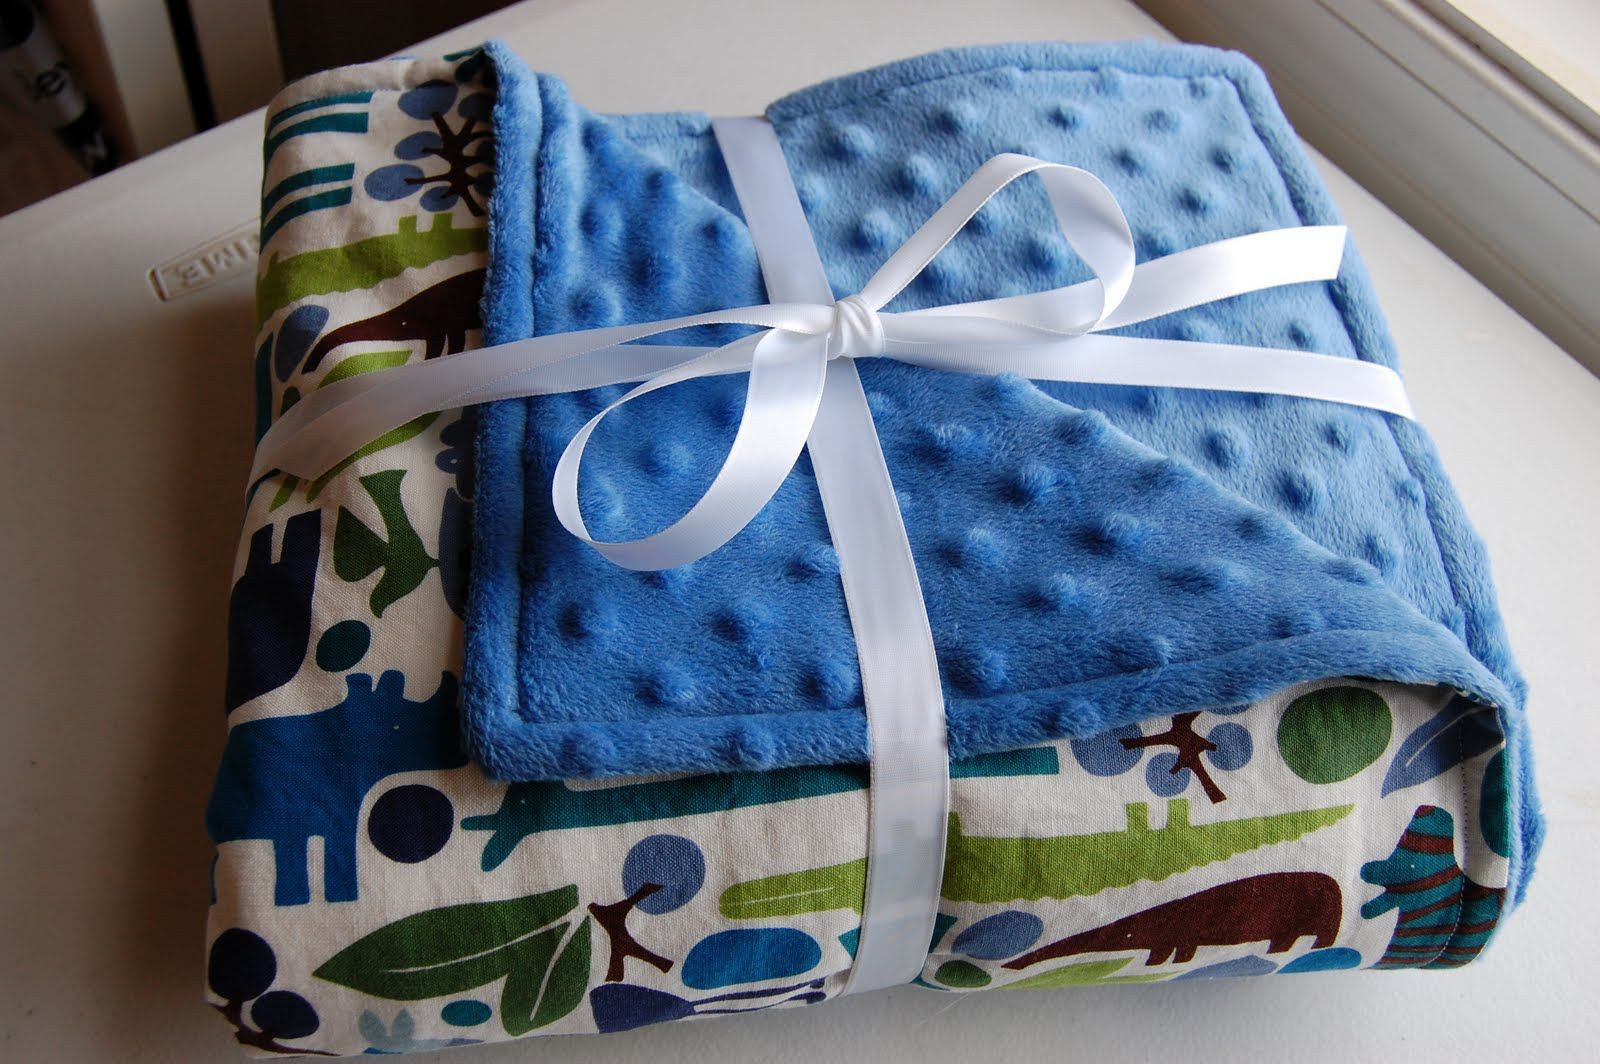 DIY Baby Blankets Ideas
 Homemade Baby Blanket crafts